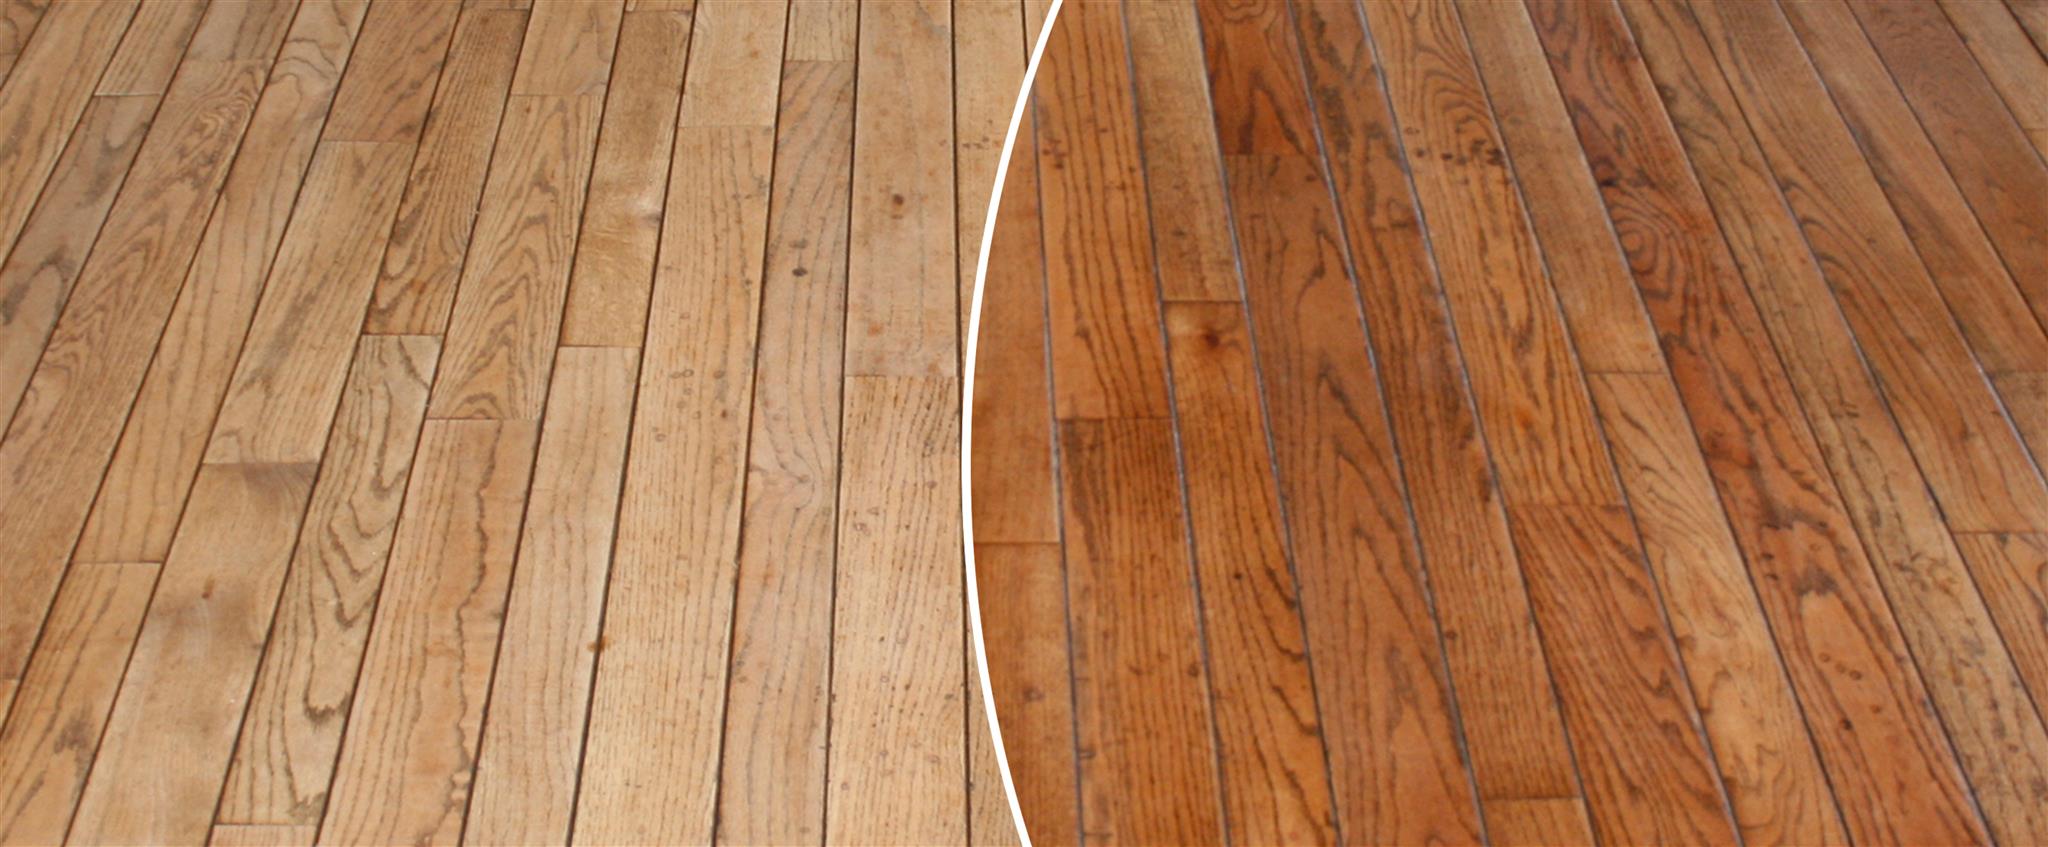 Wood Floor Refinishing Services N Hance, Hardwood Floor Refinishing Service